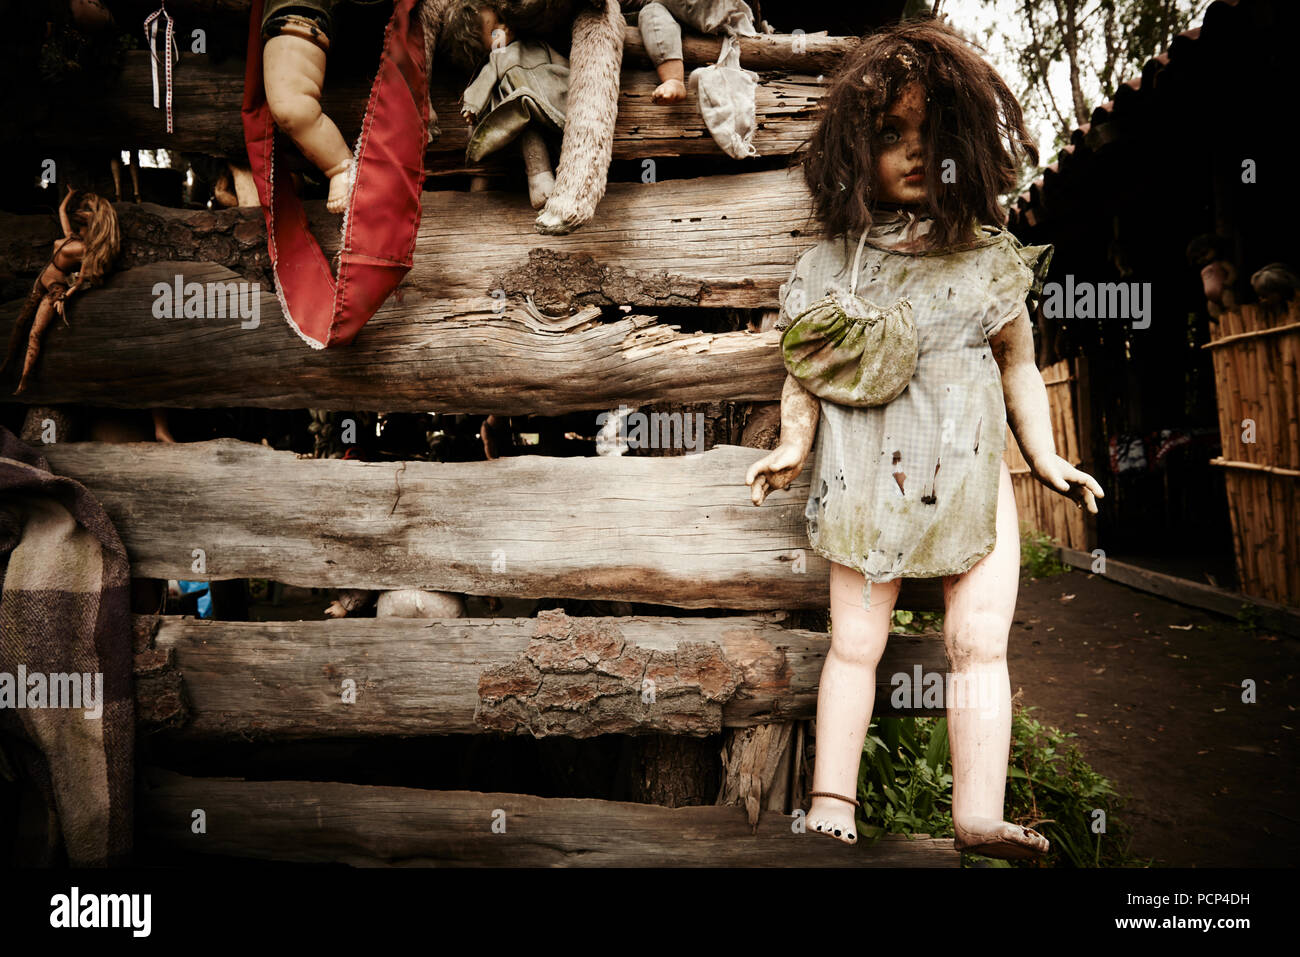 Dolls from La Isla de las Muñecas - The Island of the Dolls, Xochimilco  Mexico Stock Photo - Alamy